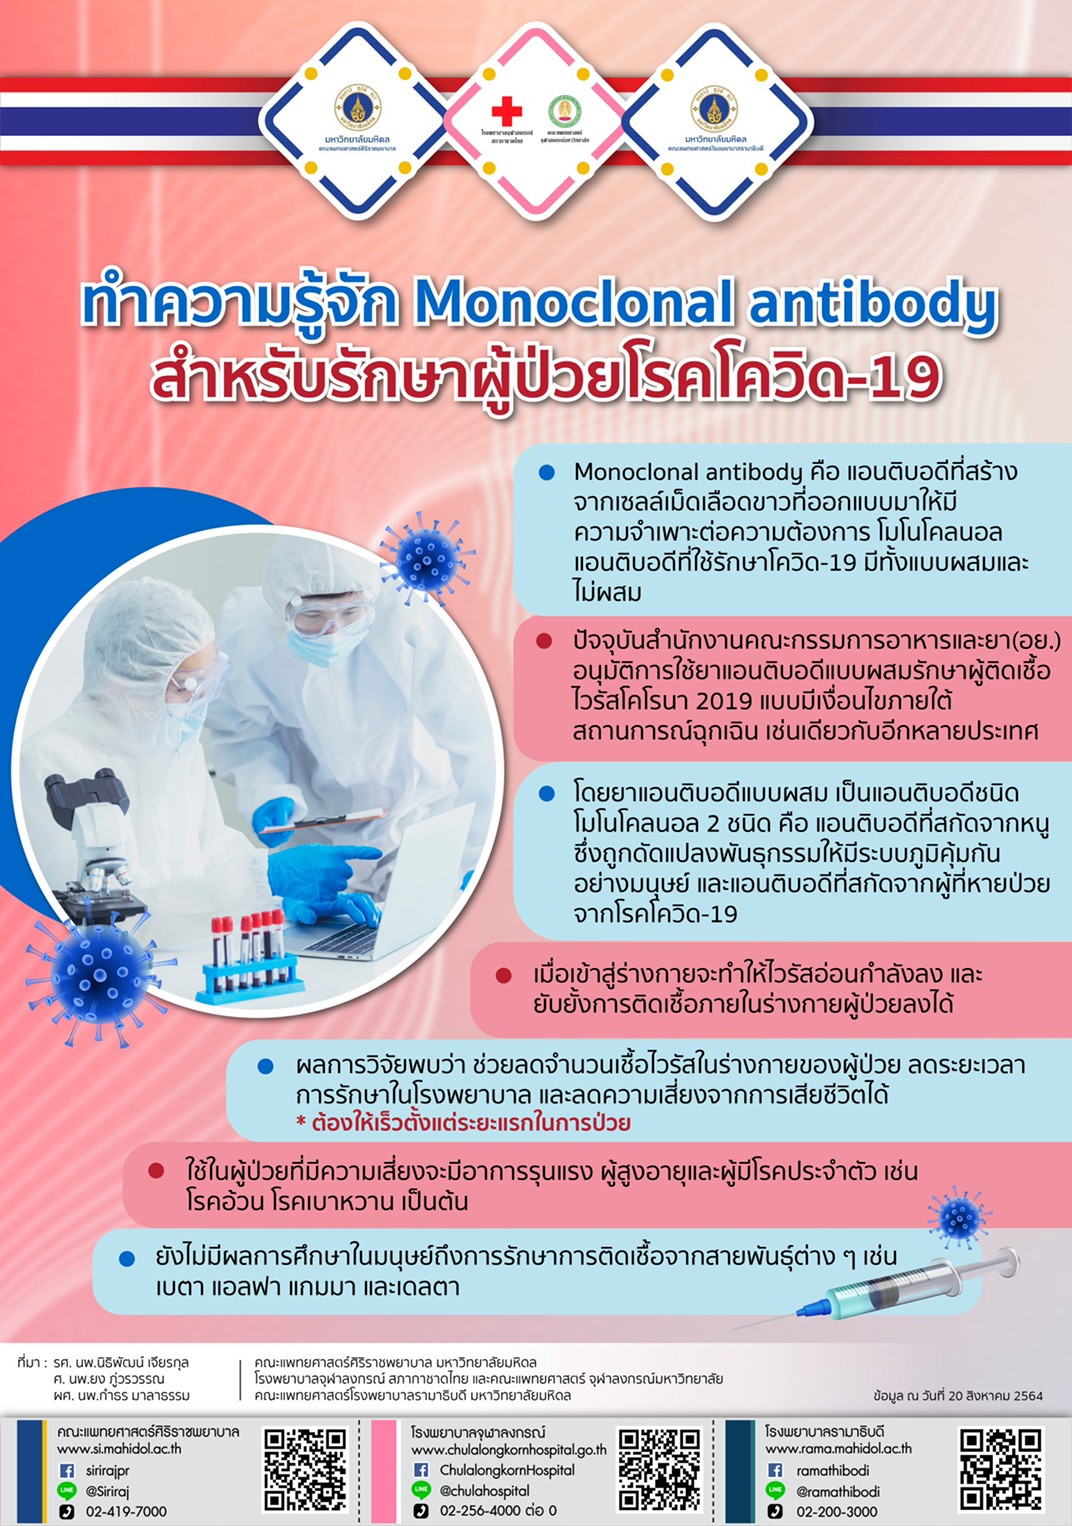 Monoclonal antibody 